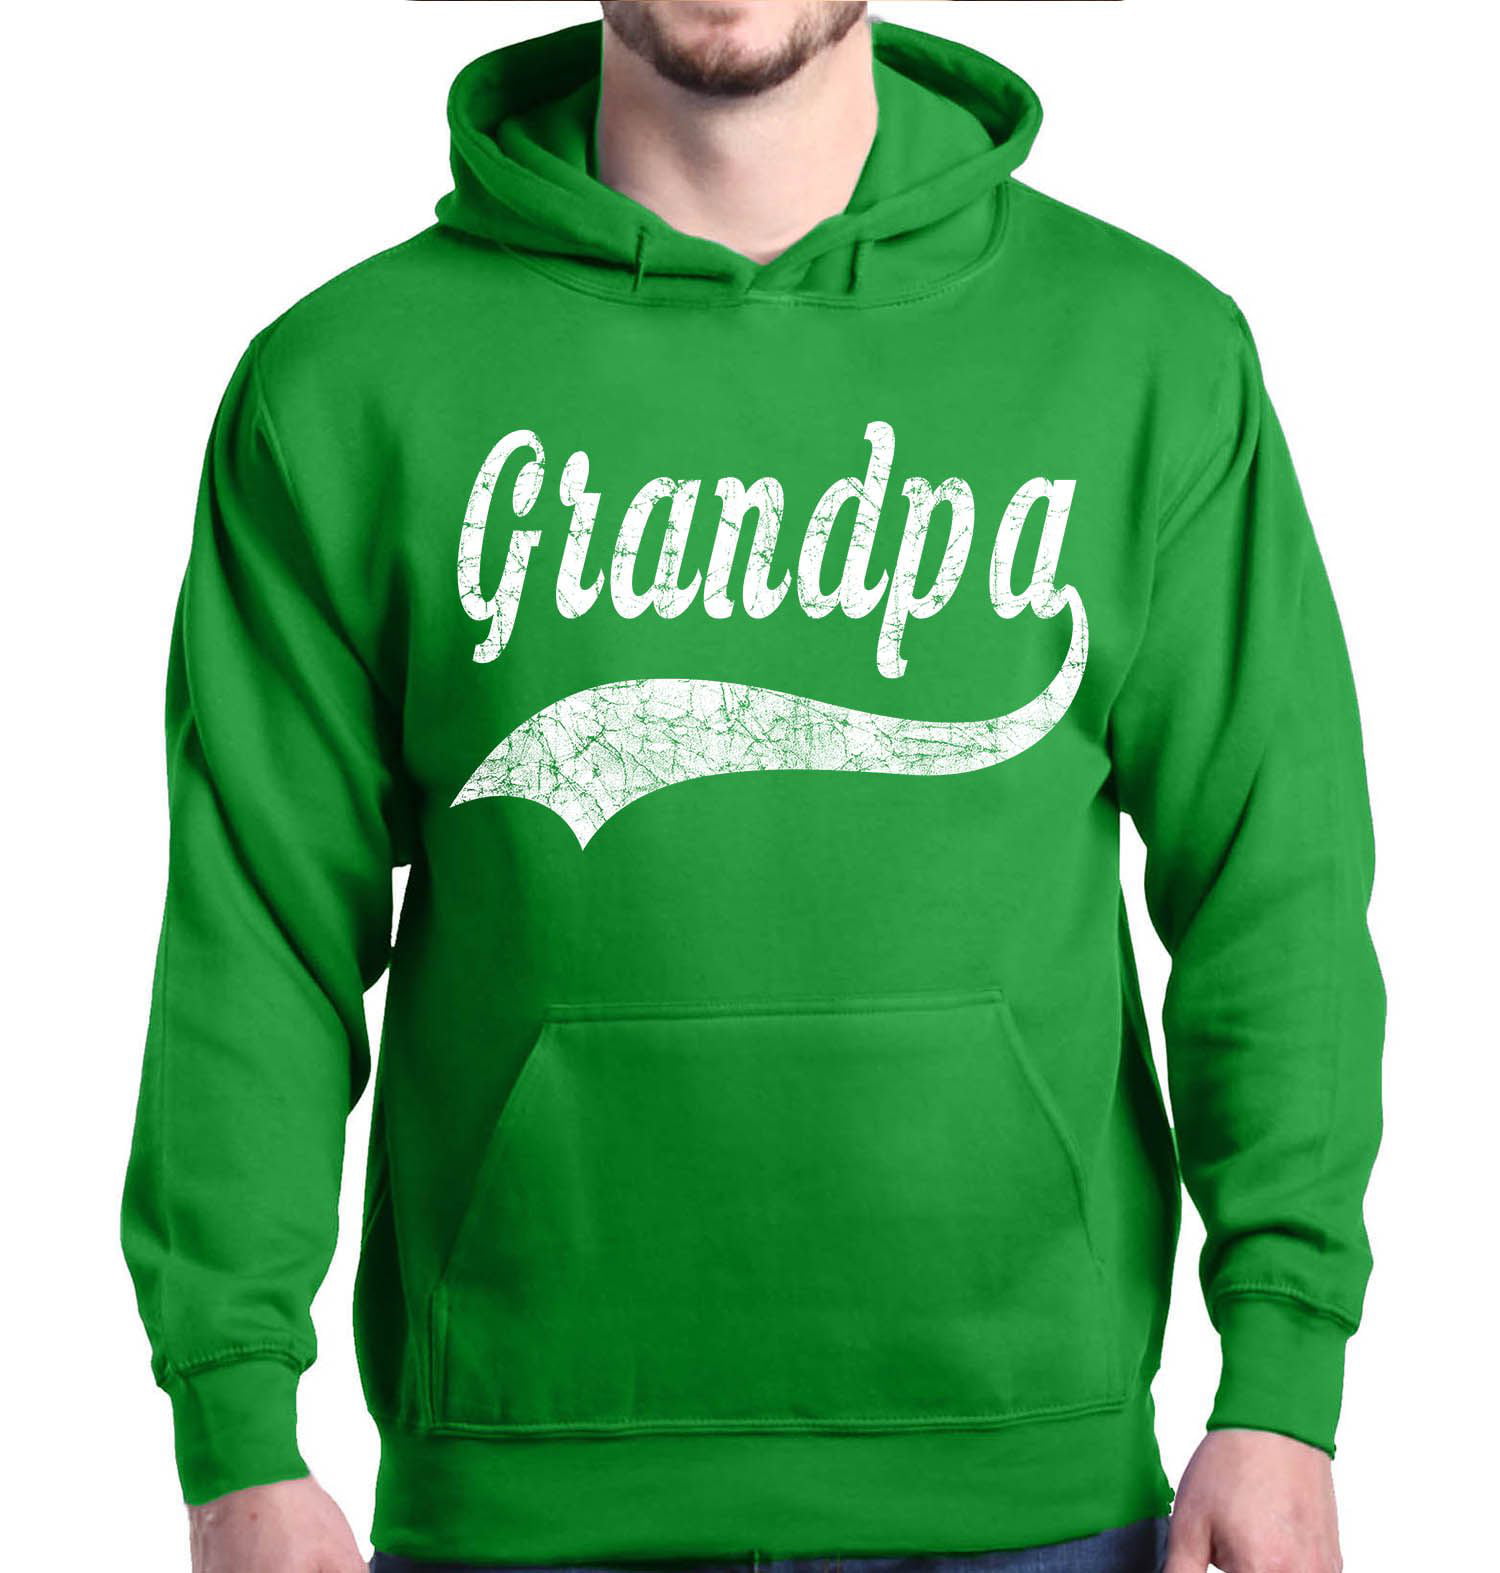  shop4ever Dad Grandpa Great Grandpa I Just Keep